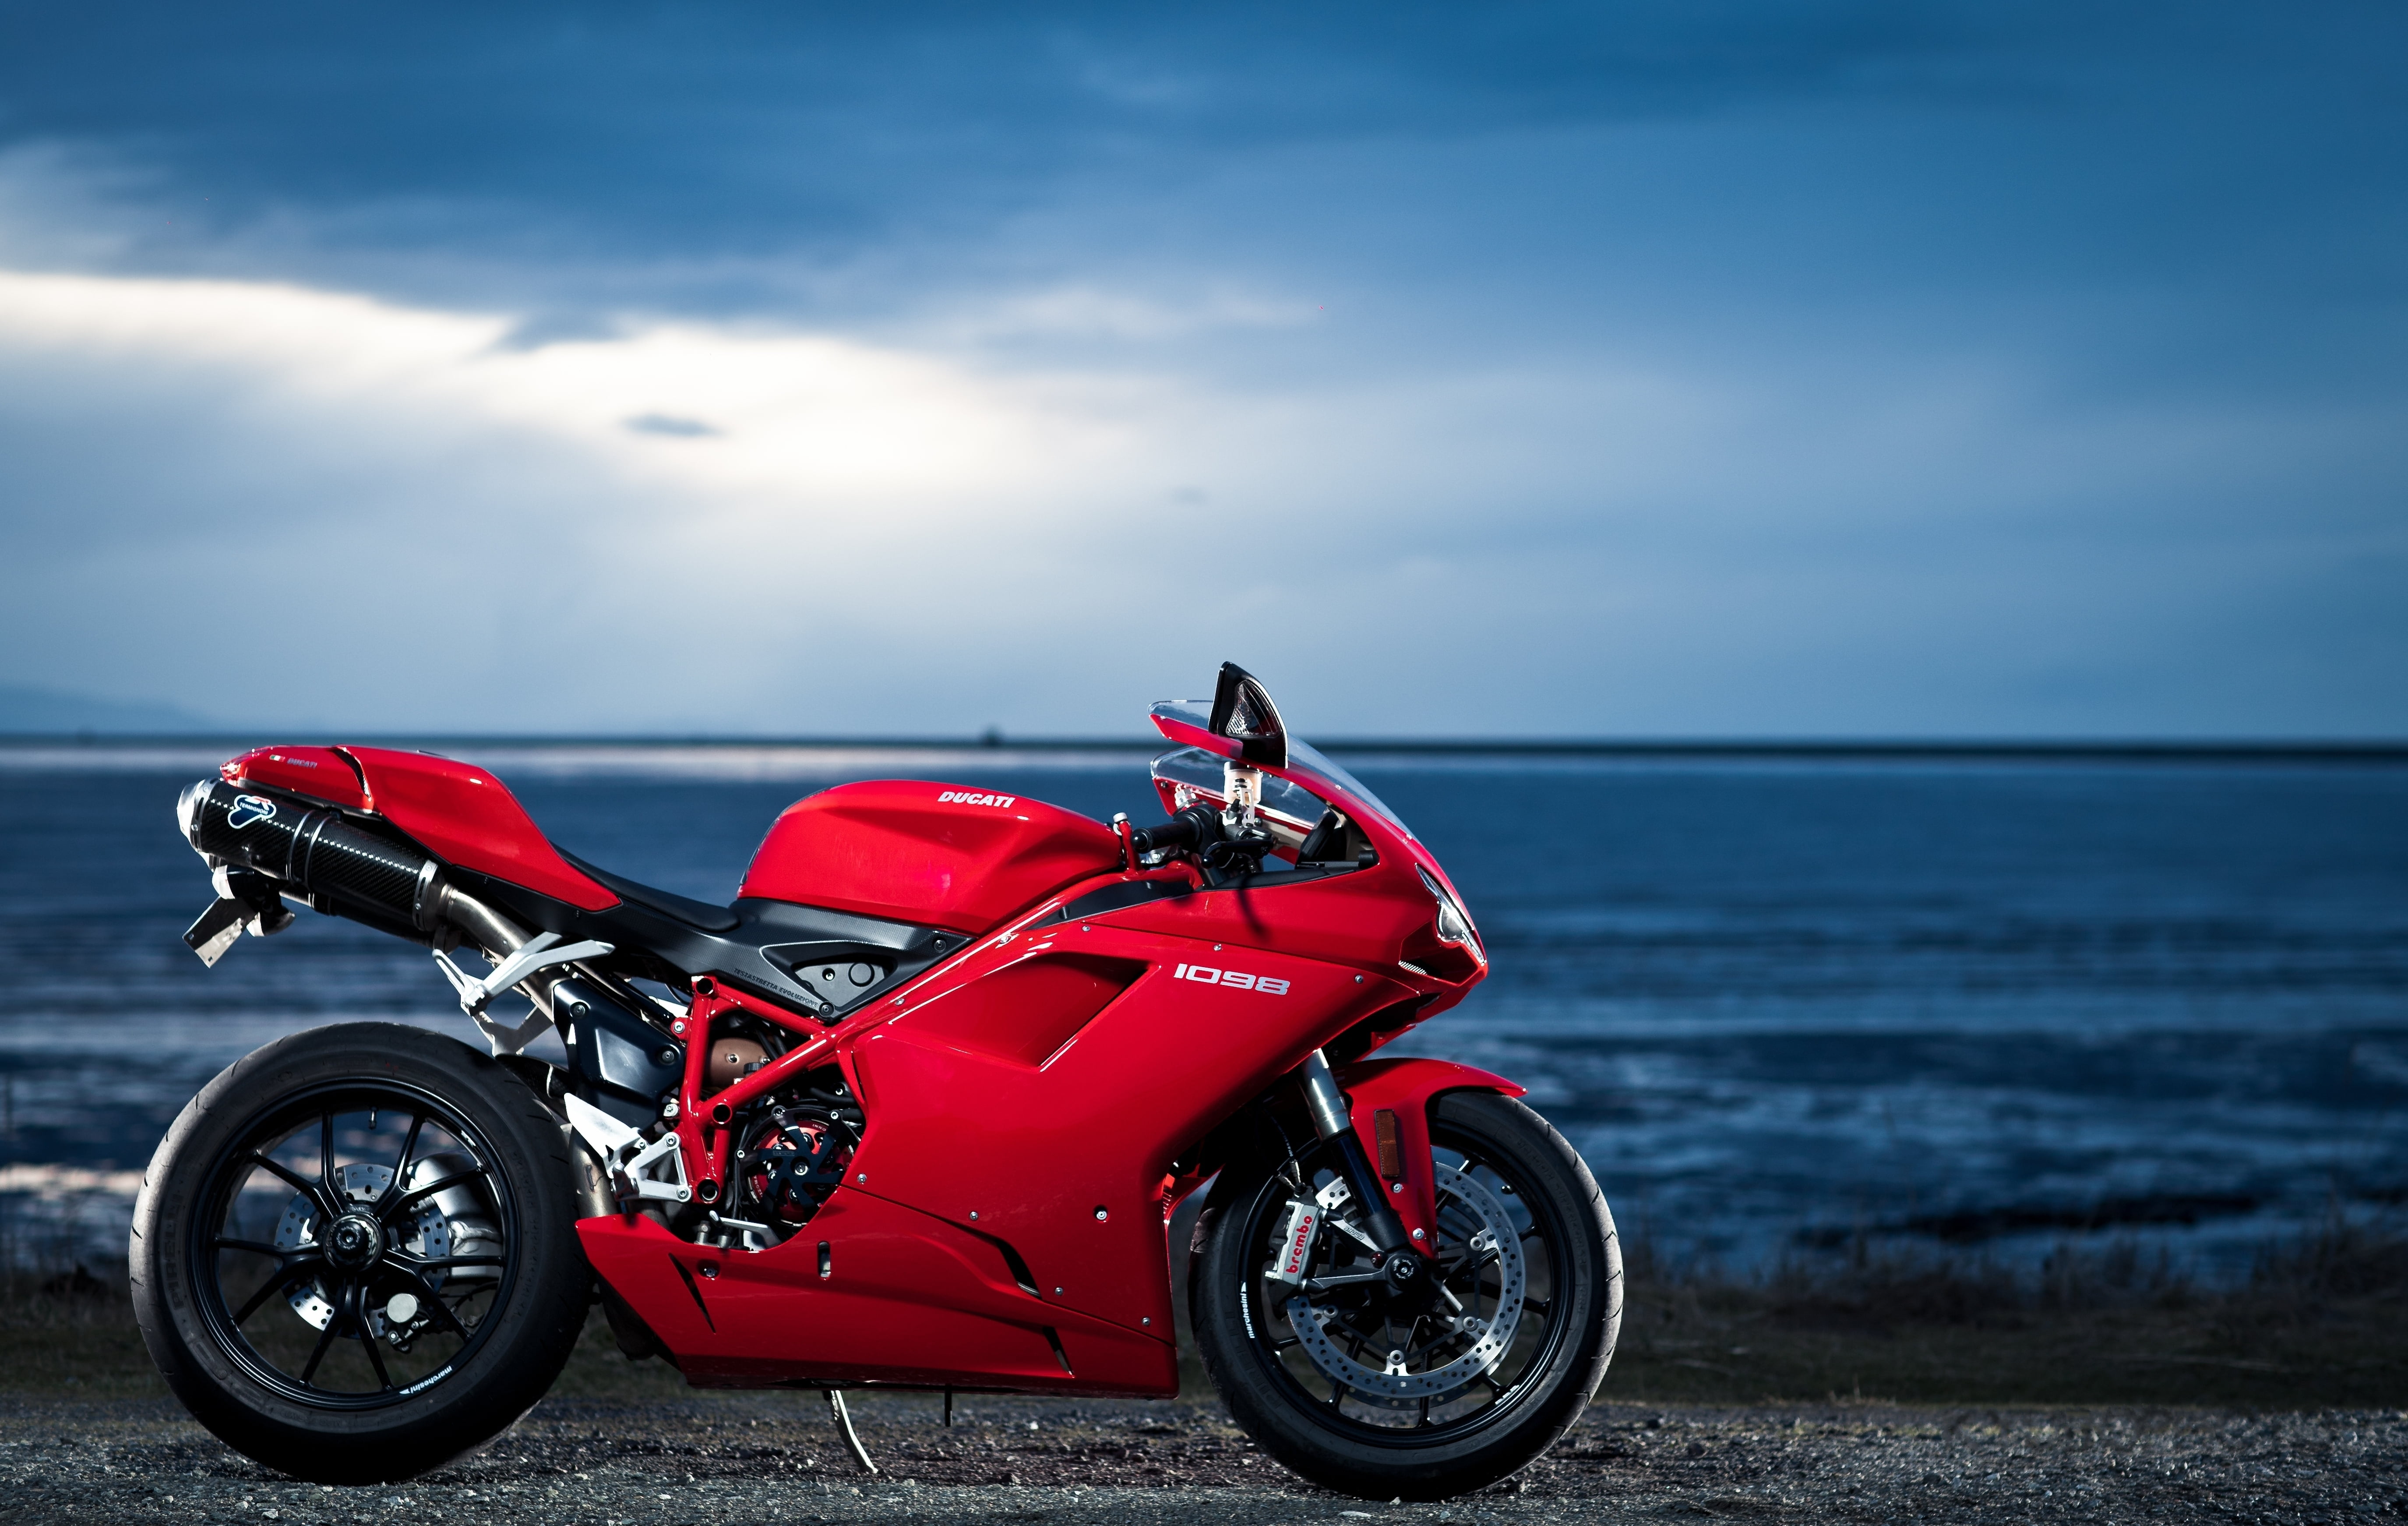 red sports bike, ducati, 1098, motorcycle, sea, speed, outdoors